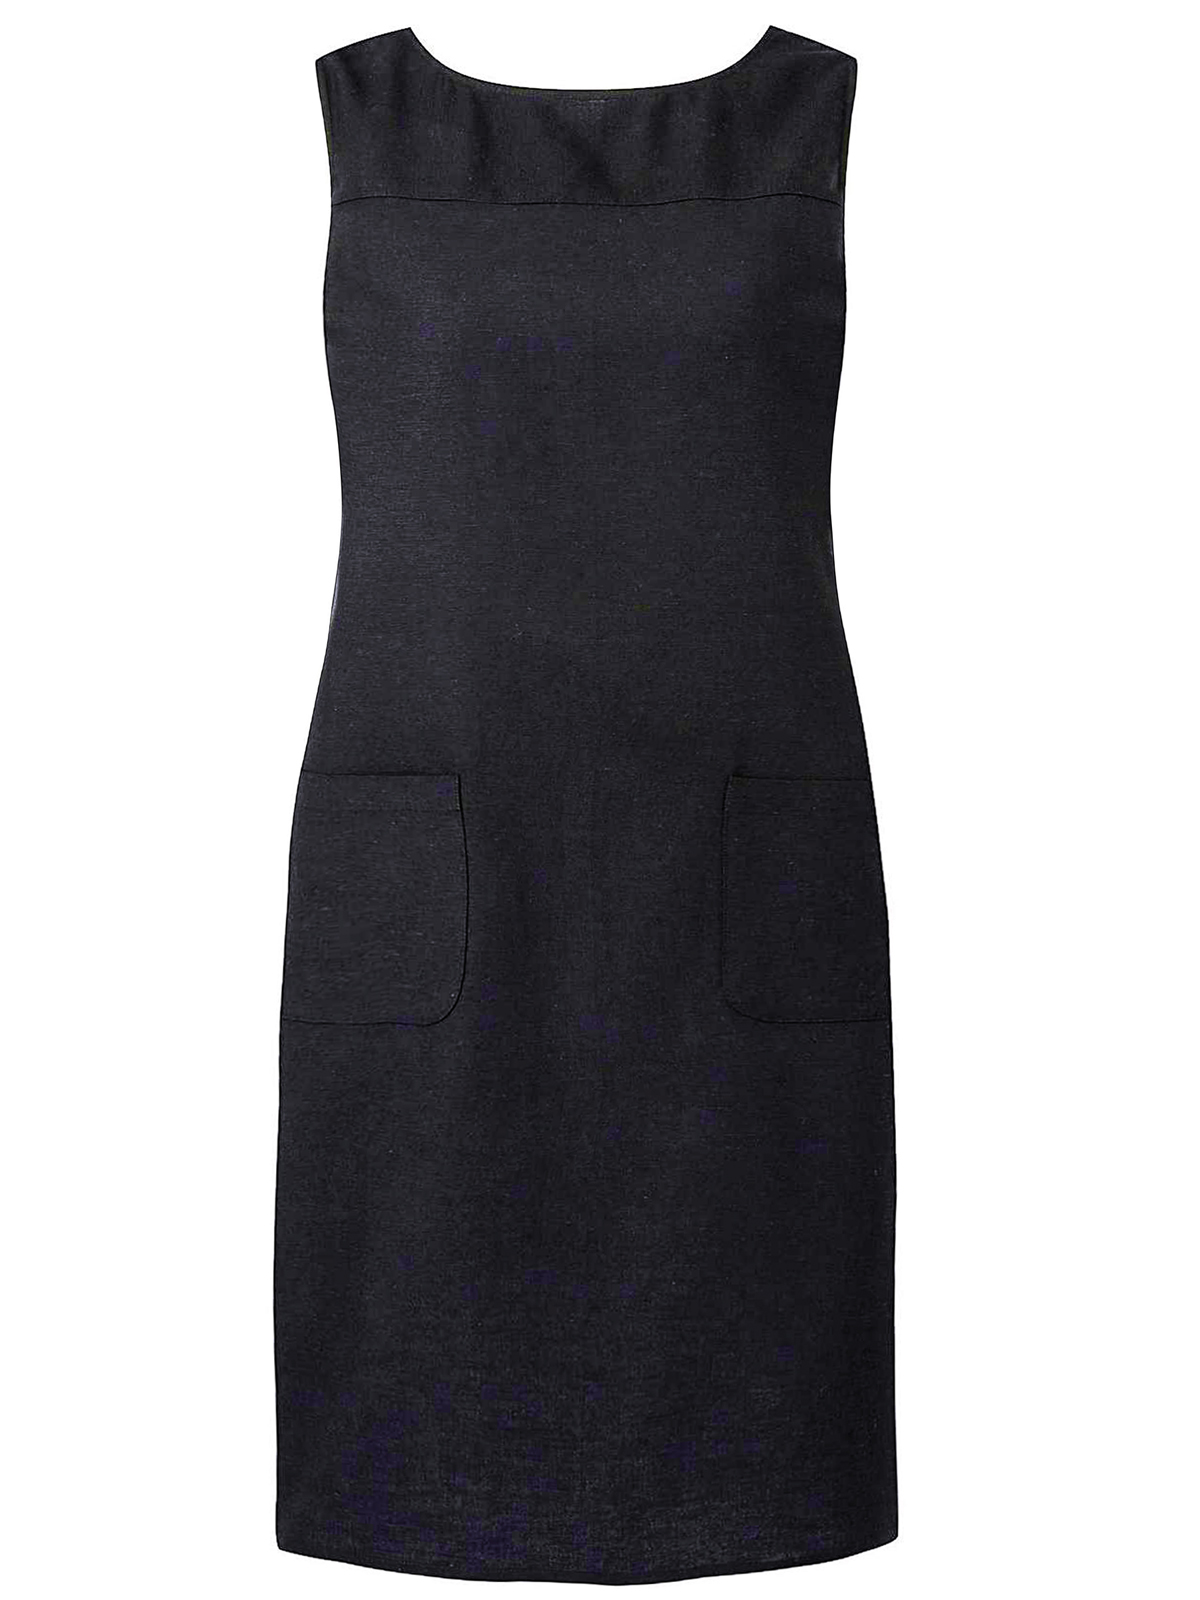 black sleeveless shift dress uk